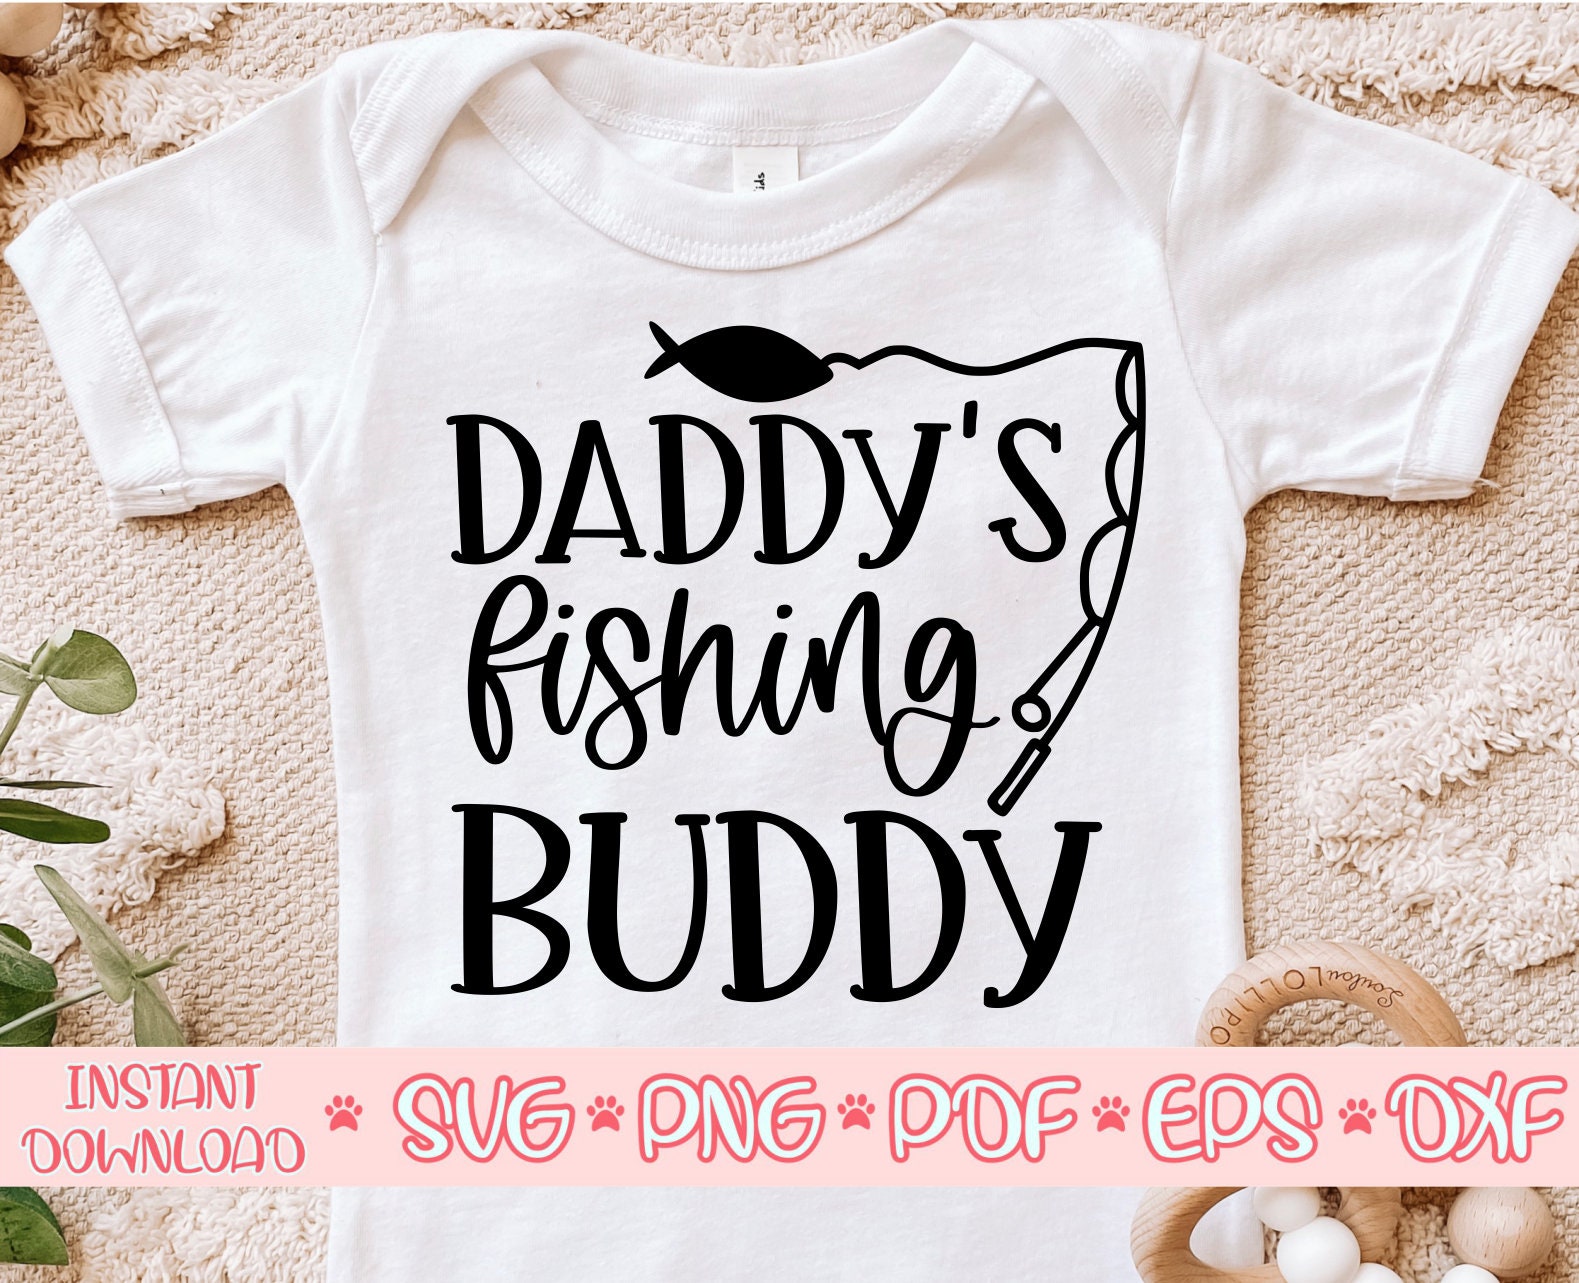 Grandpas Fishing Buddy Svg Fishing Svg Funny Kids Svg Granddad Svg Baby Boy  Svg Boy Shirt Bodysuit Svg Toddler Svg for Cricut & Silhouette -  Canada